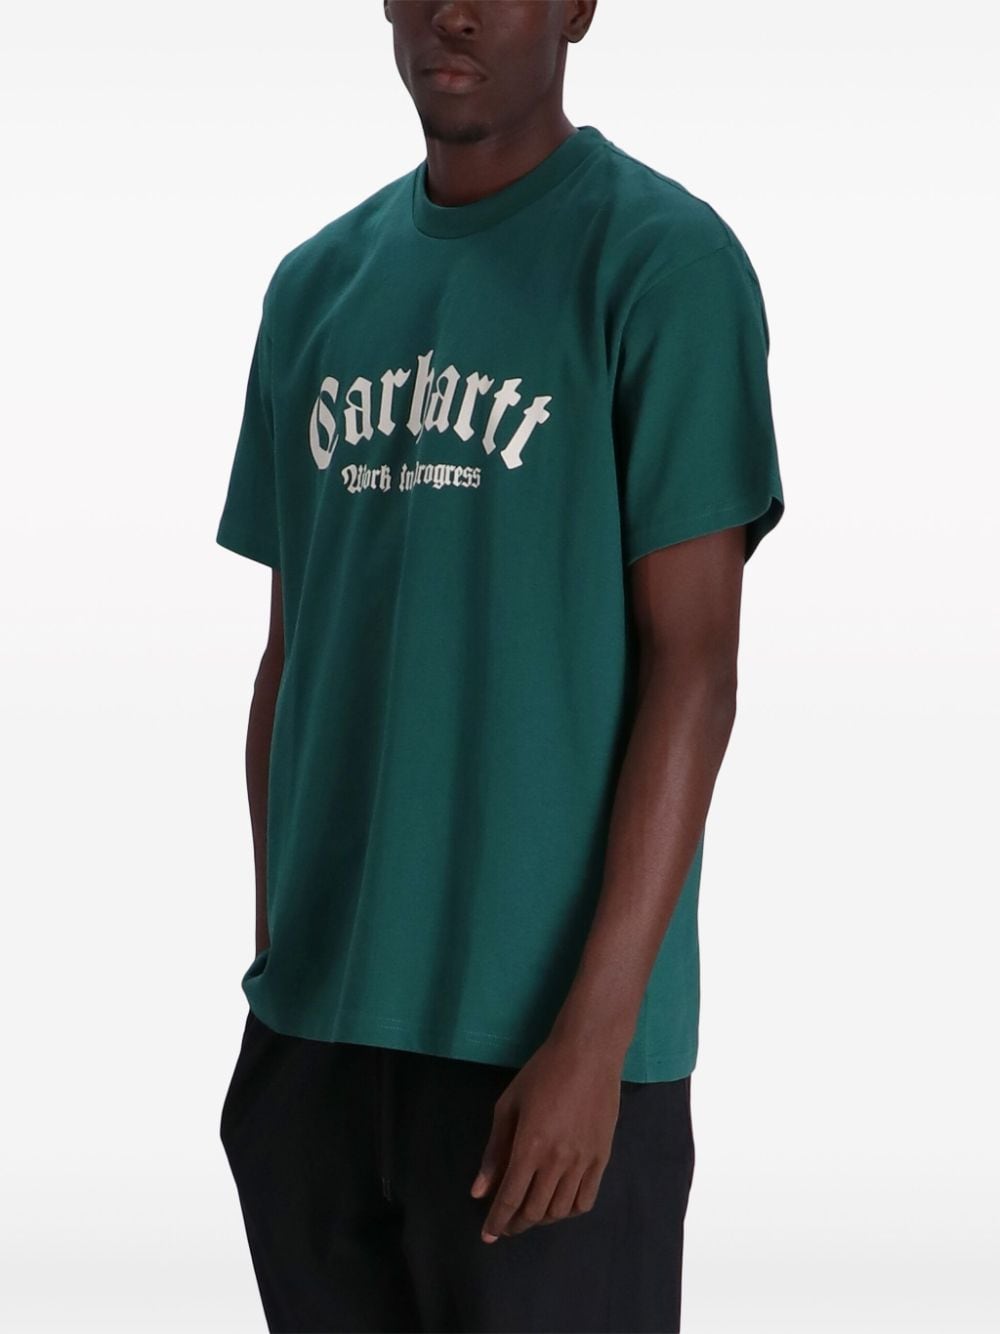 Carhartt WIP T-shirt met logoprint Groen